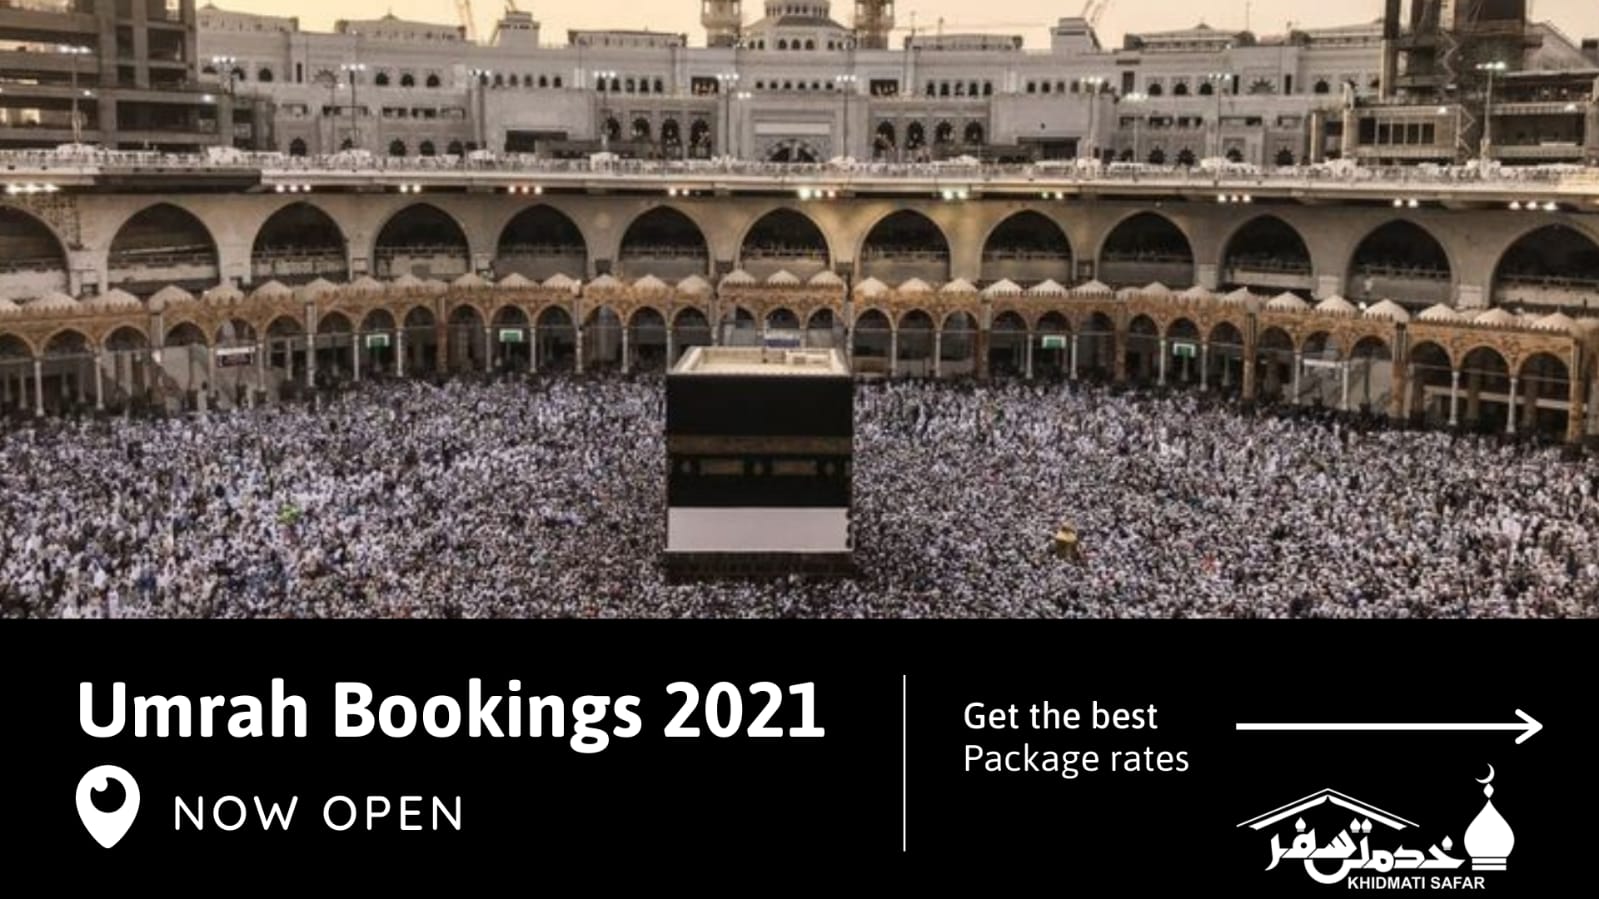 Umrah booking has finally started after a long gap